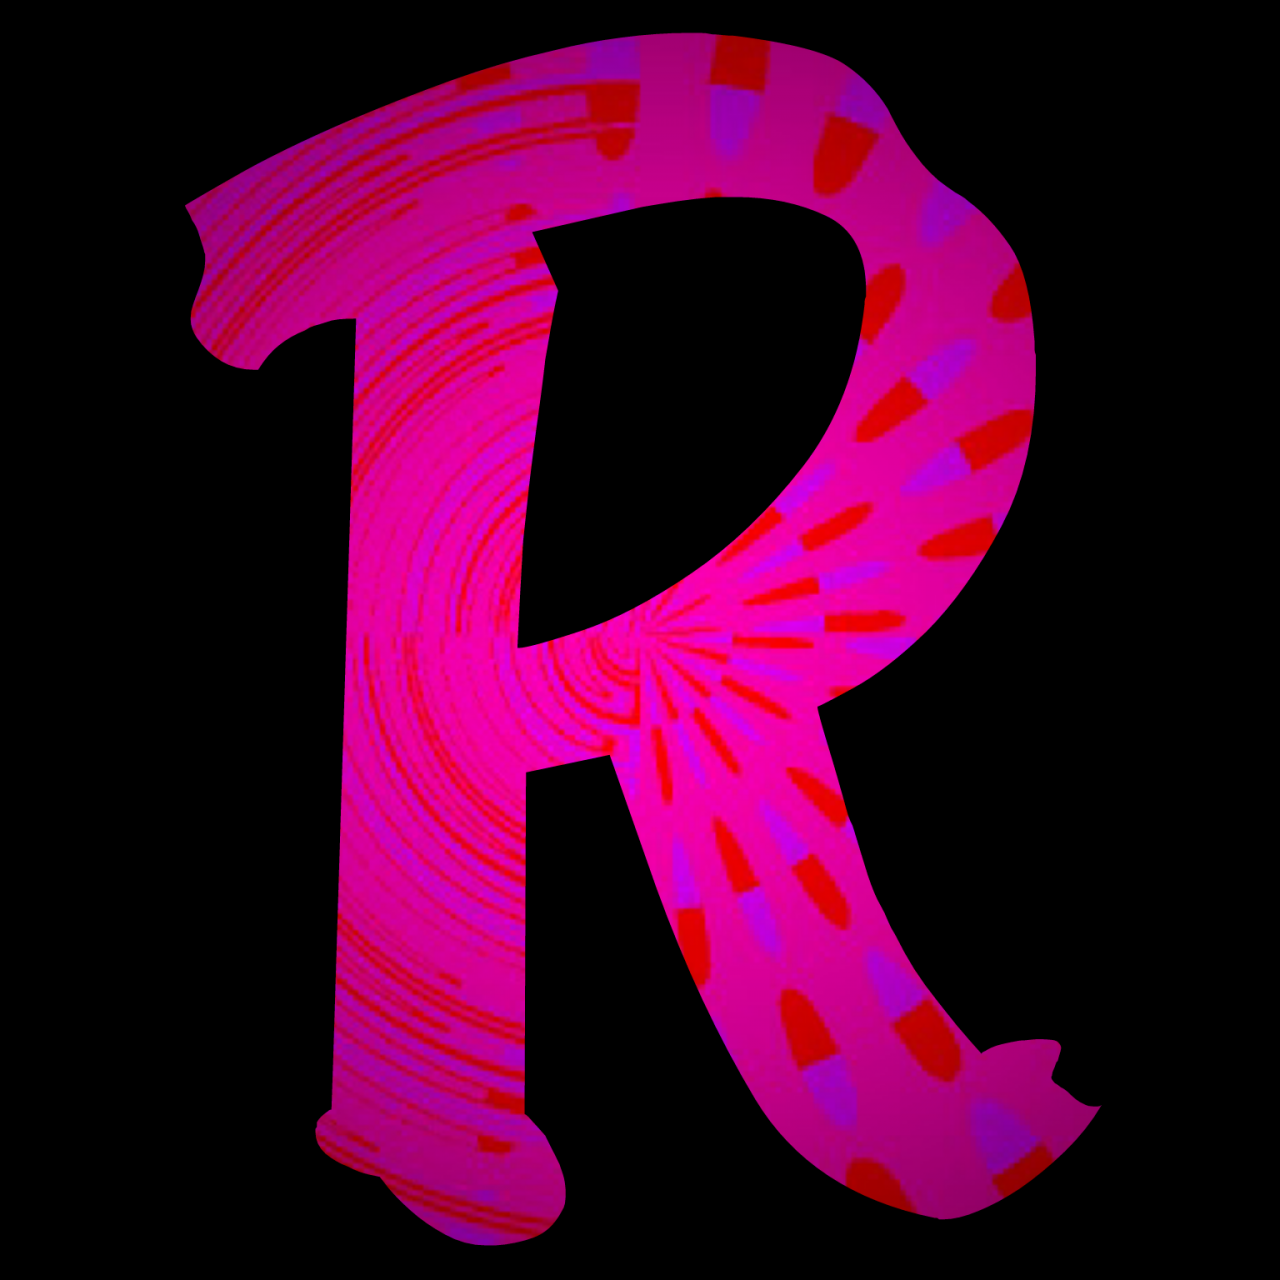 صور حرف ال r , رمزيات مزخرف بحرف r - شوق وغزل